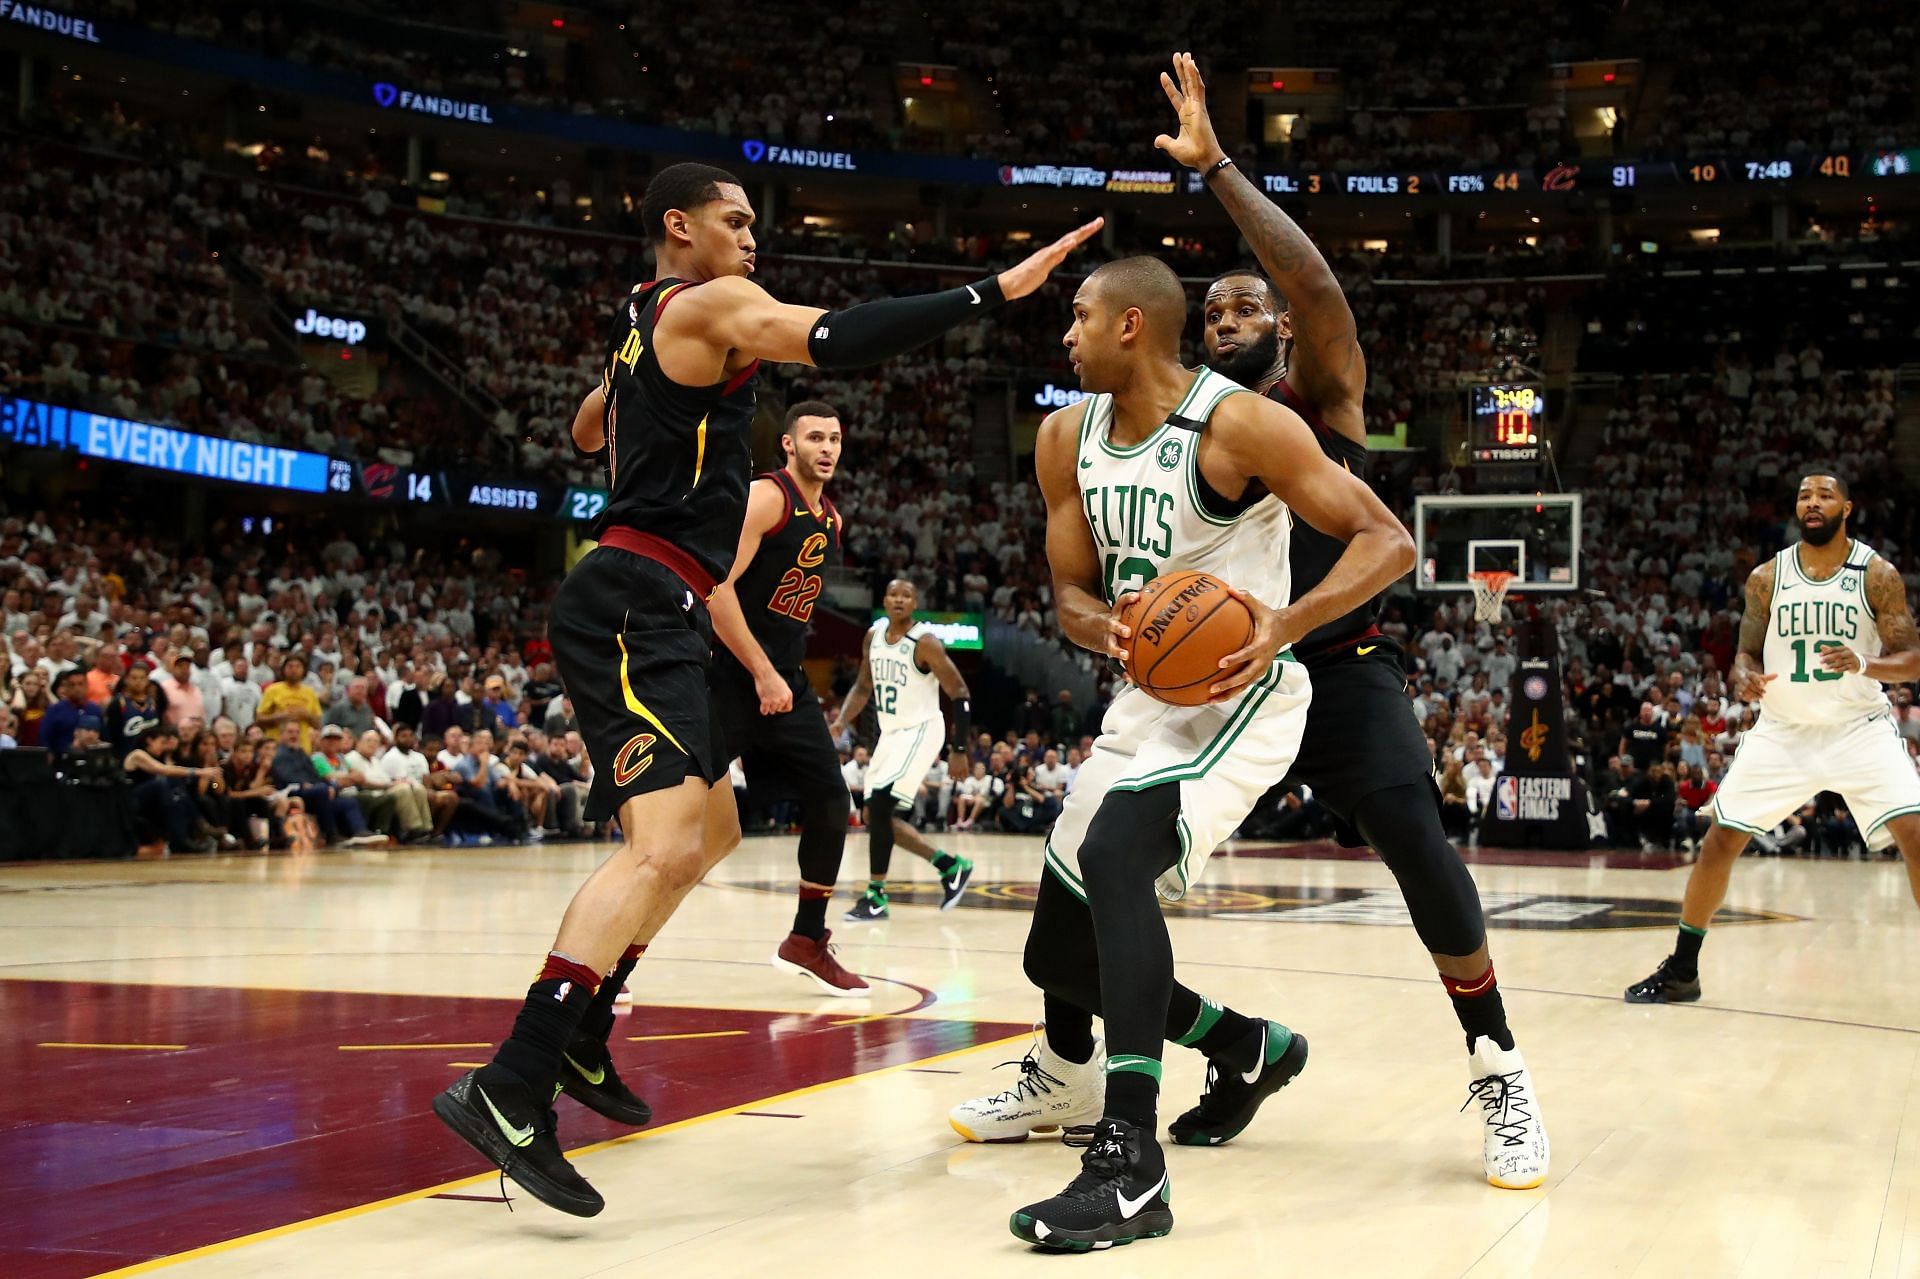 Boston Celtics v Cleveland Cavaliers - Game Six